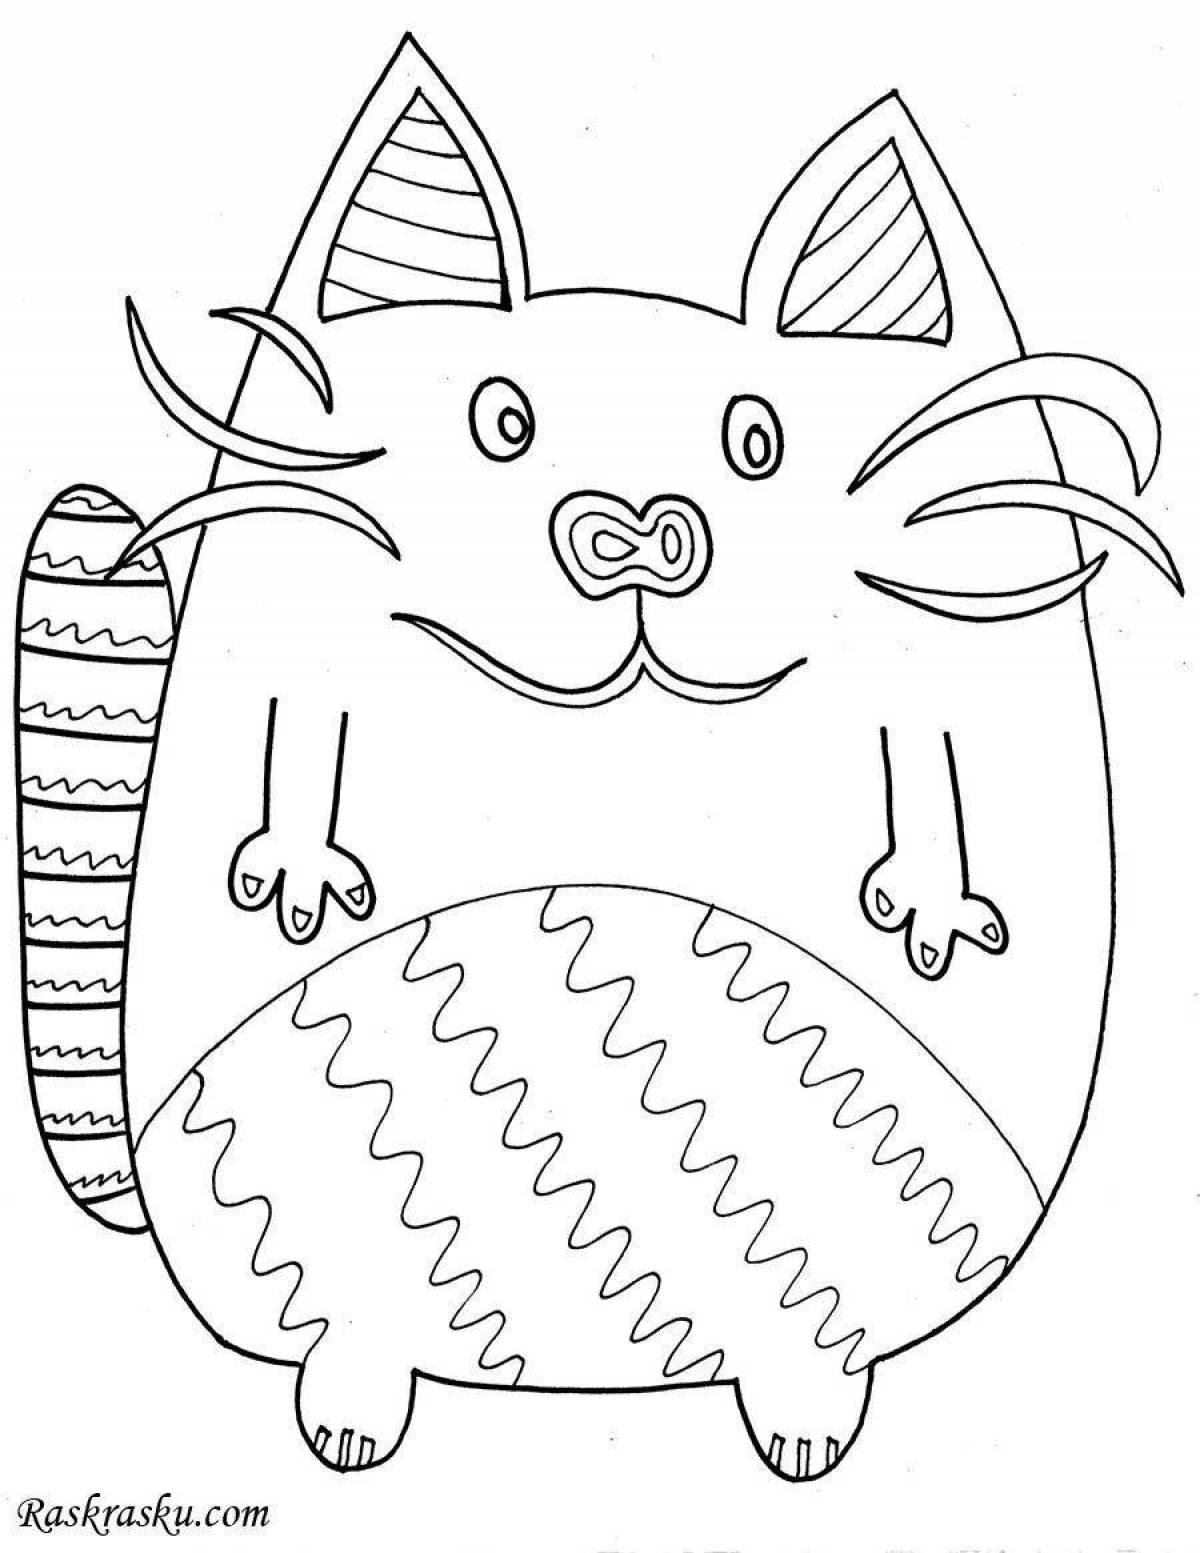 Royal cat coloring page